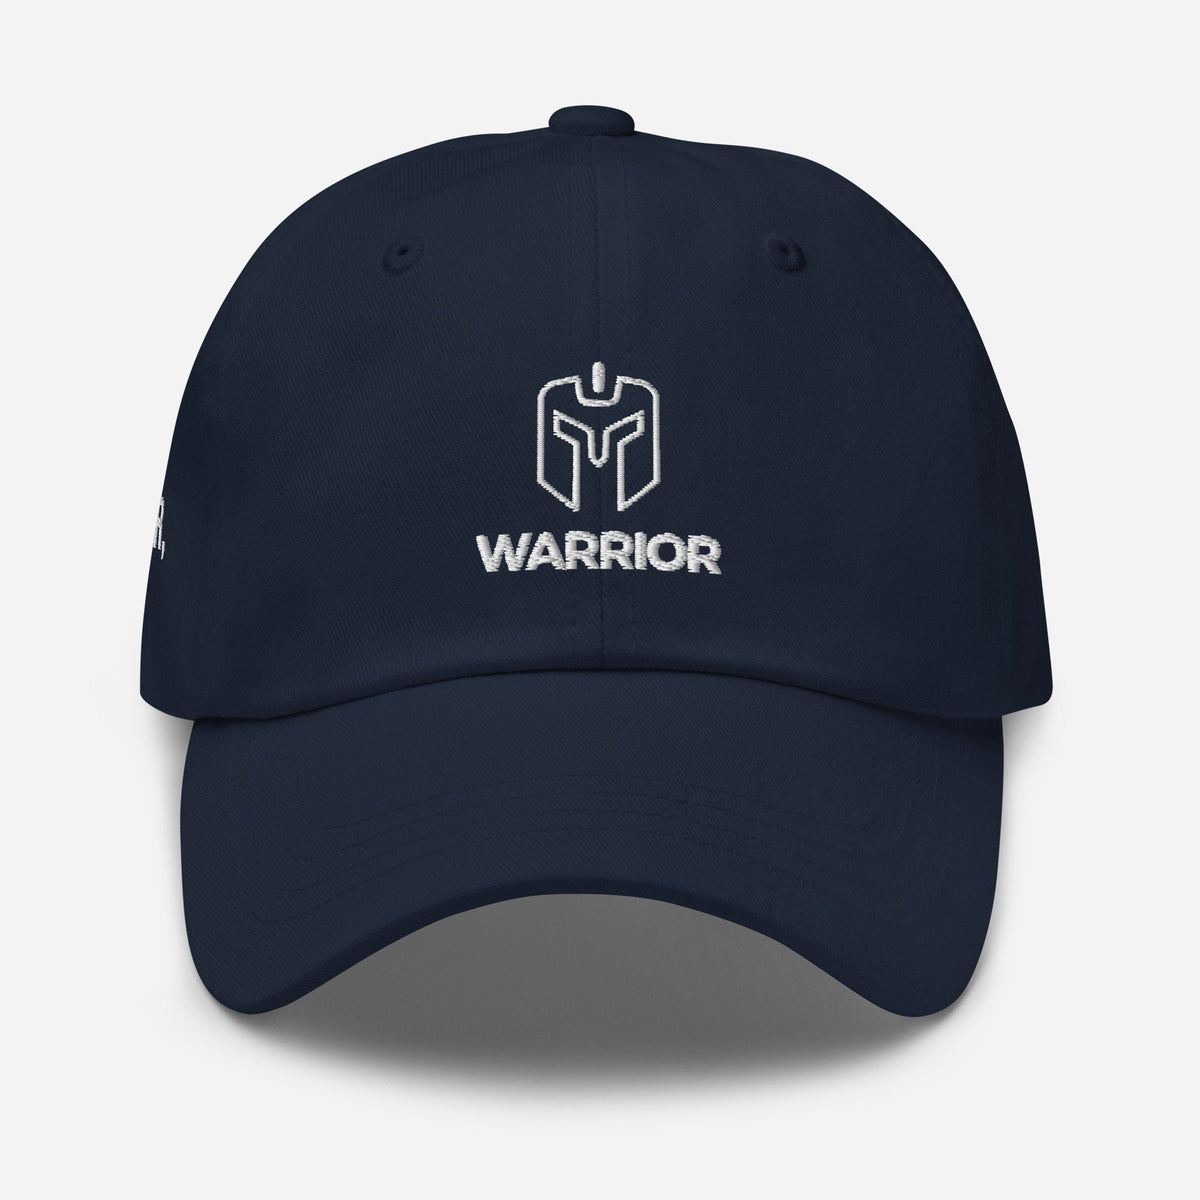 Warrior Logo Hat - Non Ducor, Duco (I&#39;m Not Led, I Lead)